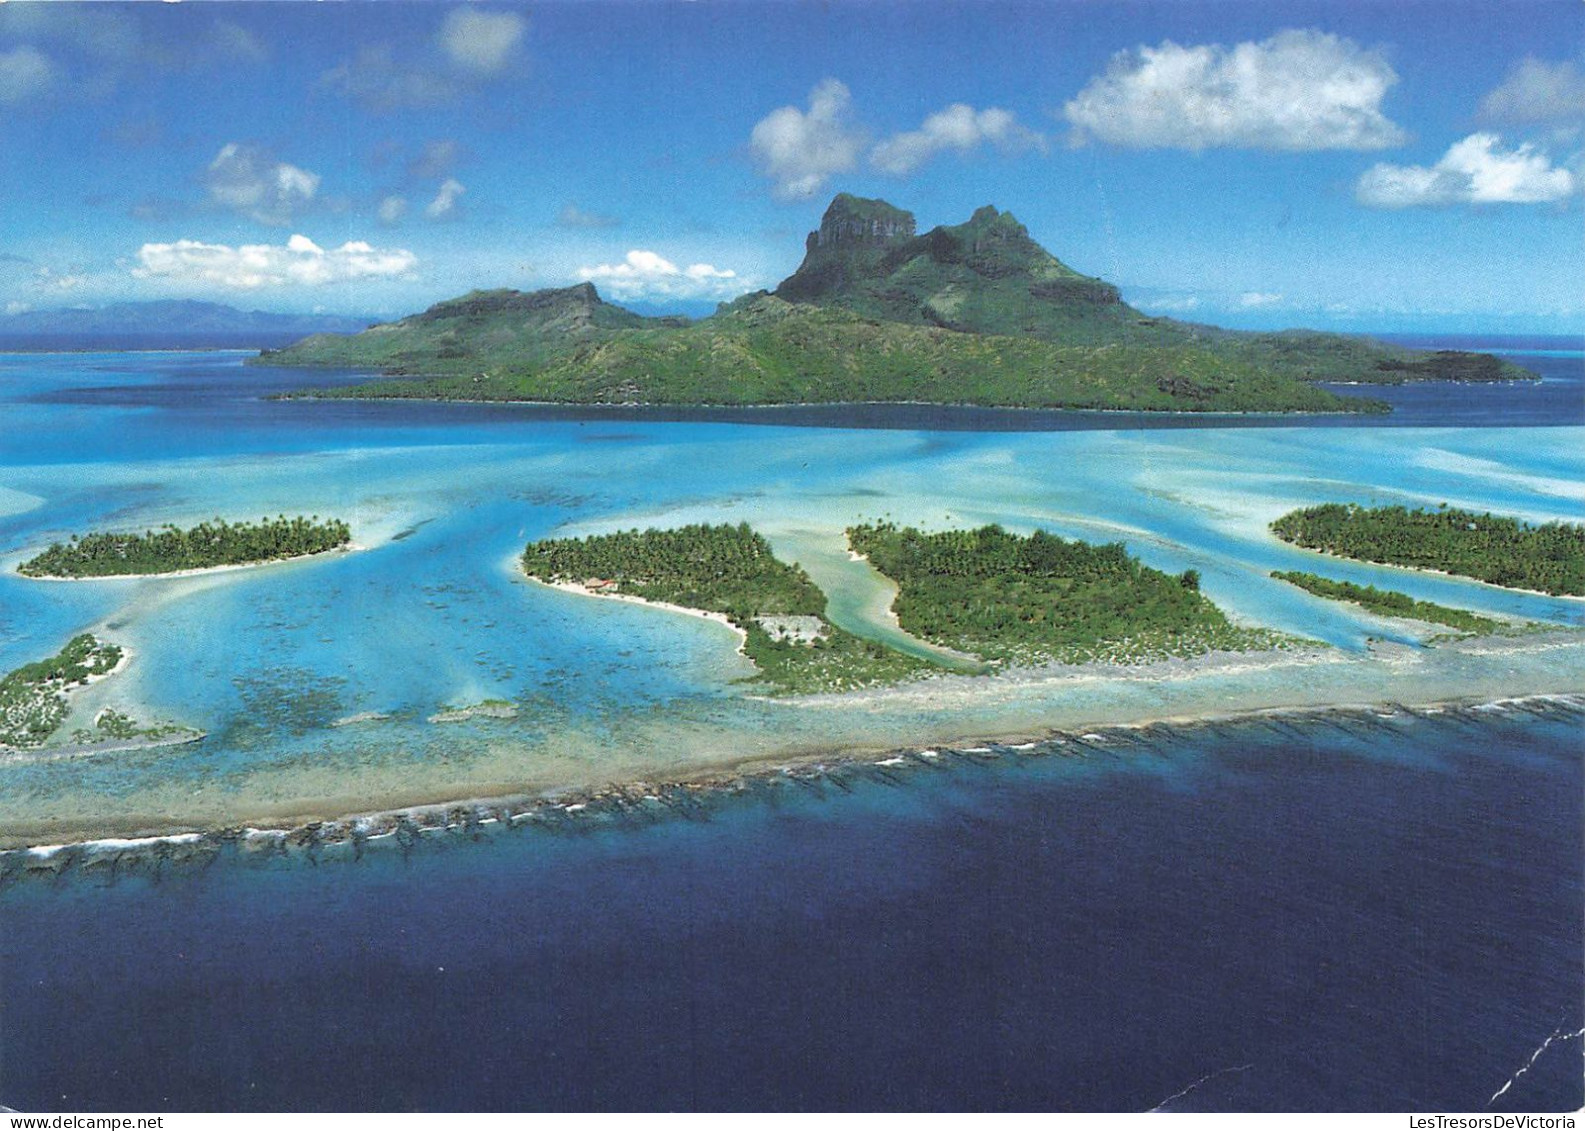 POLYNESIE FRANCAISE - Bora Bora - Vue Sur La Mer - Iles - Carte Postale - Französisch-Polynesien